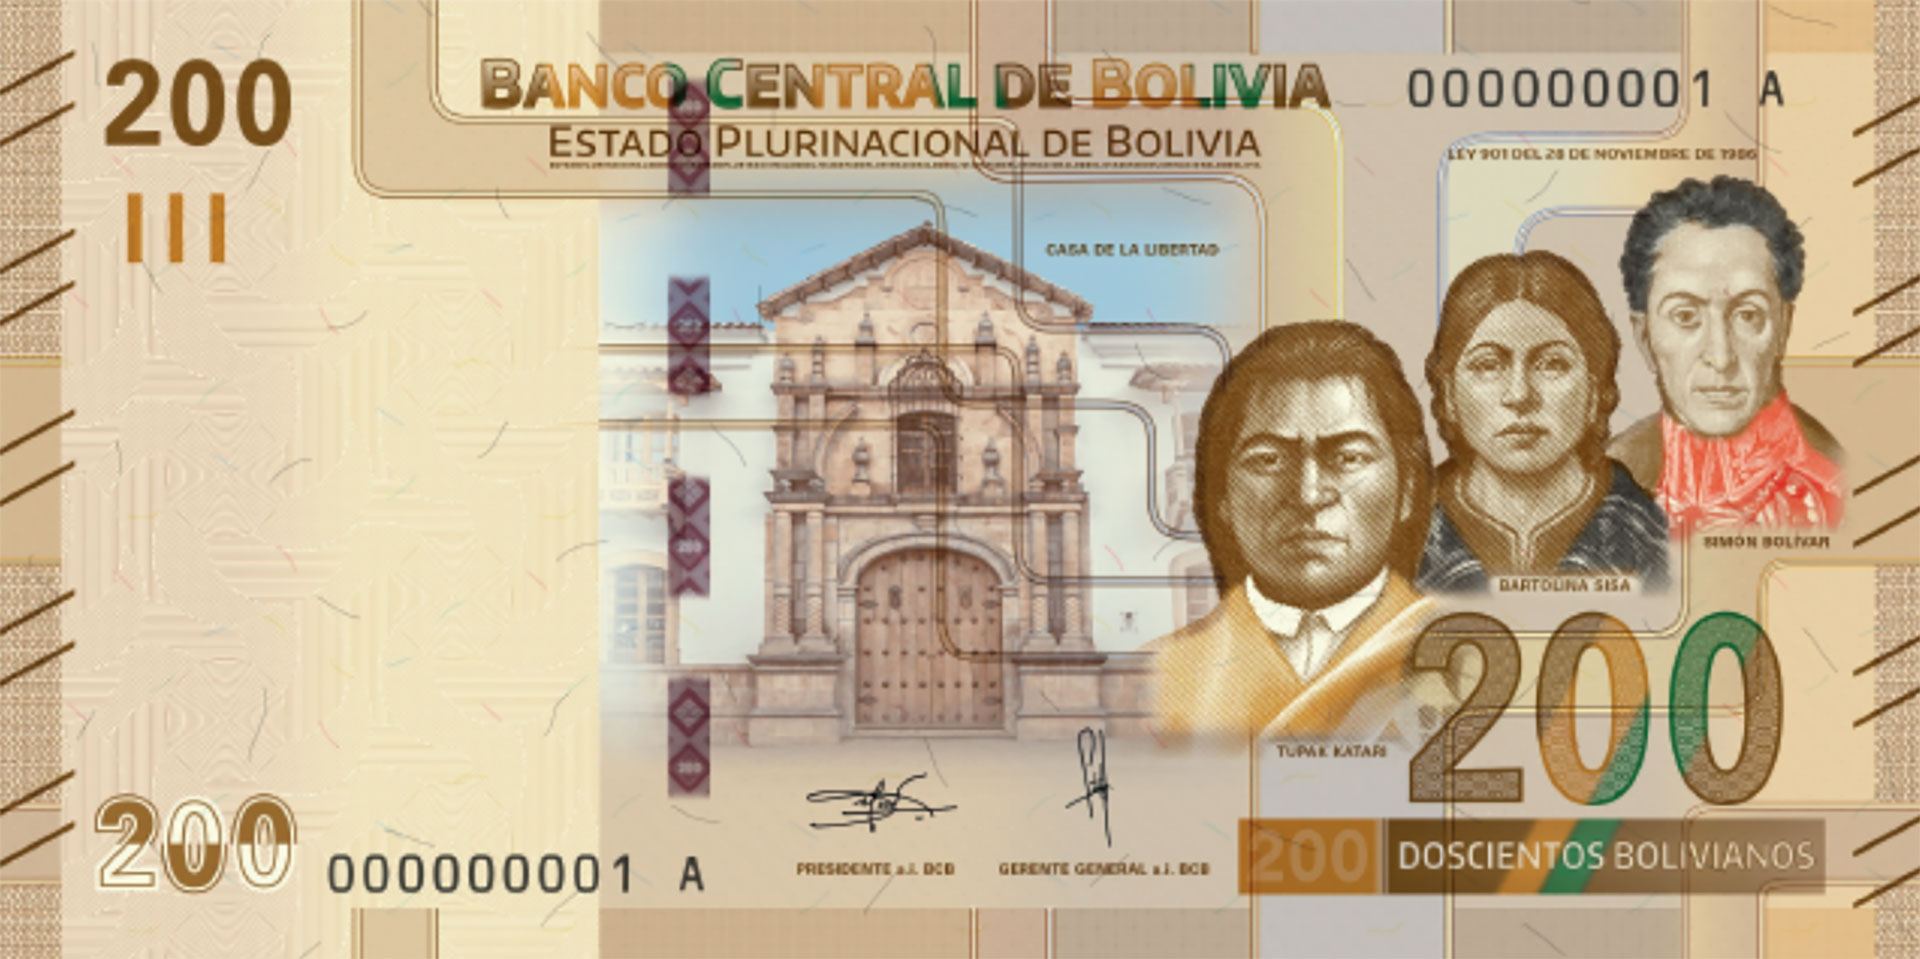 BOLIVIA
Peso Boliviano: Bs 200 = USD 28.95
USD1 = Bs 6.91